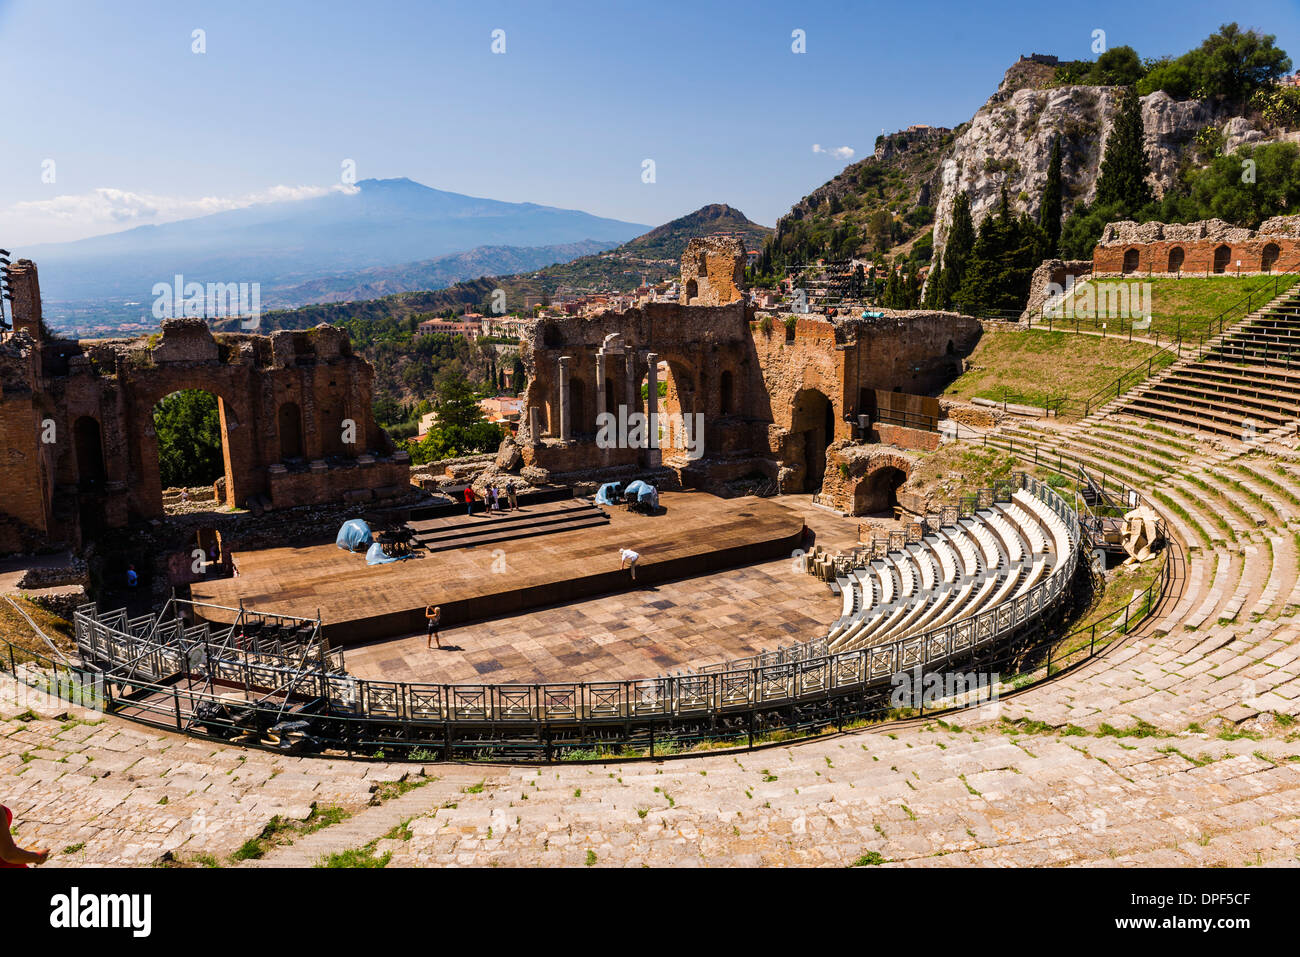 Teatro Greco (Greek Theatre), view of the amphitheatre and Mount Etna Volcano, Taormina, Sicily, Italy, Europe Stock Photo